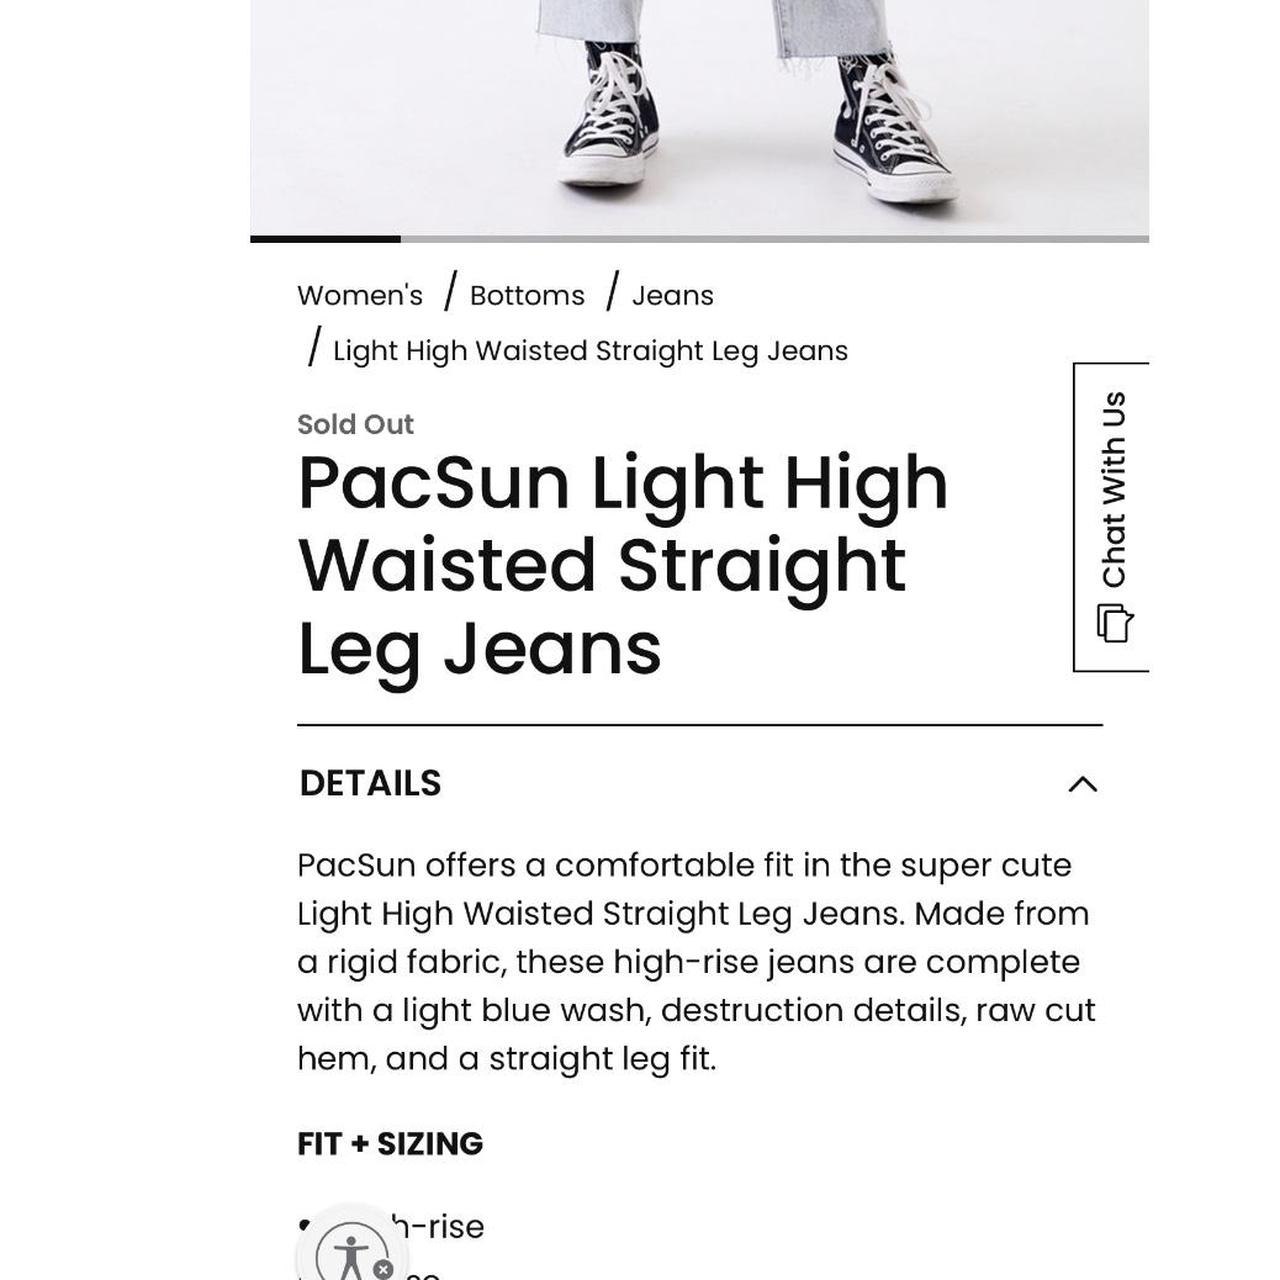 PacSun Light High Waisted Straight Leg Jeans